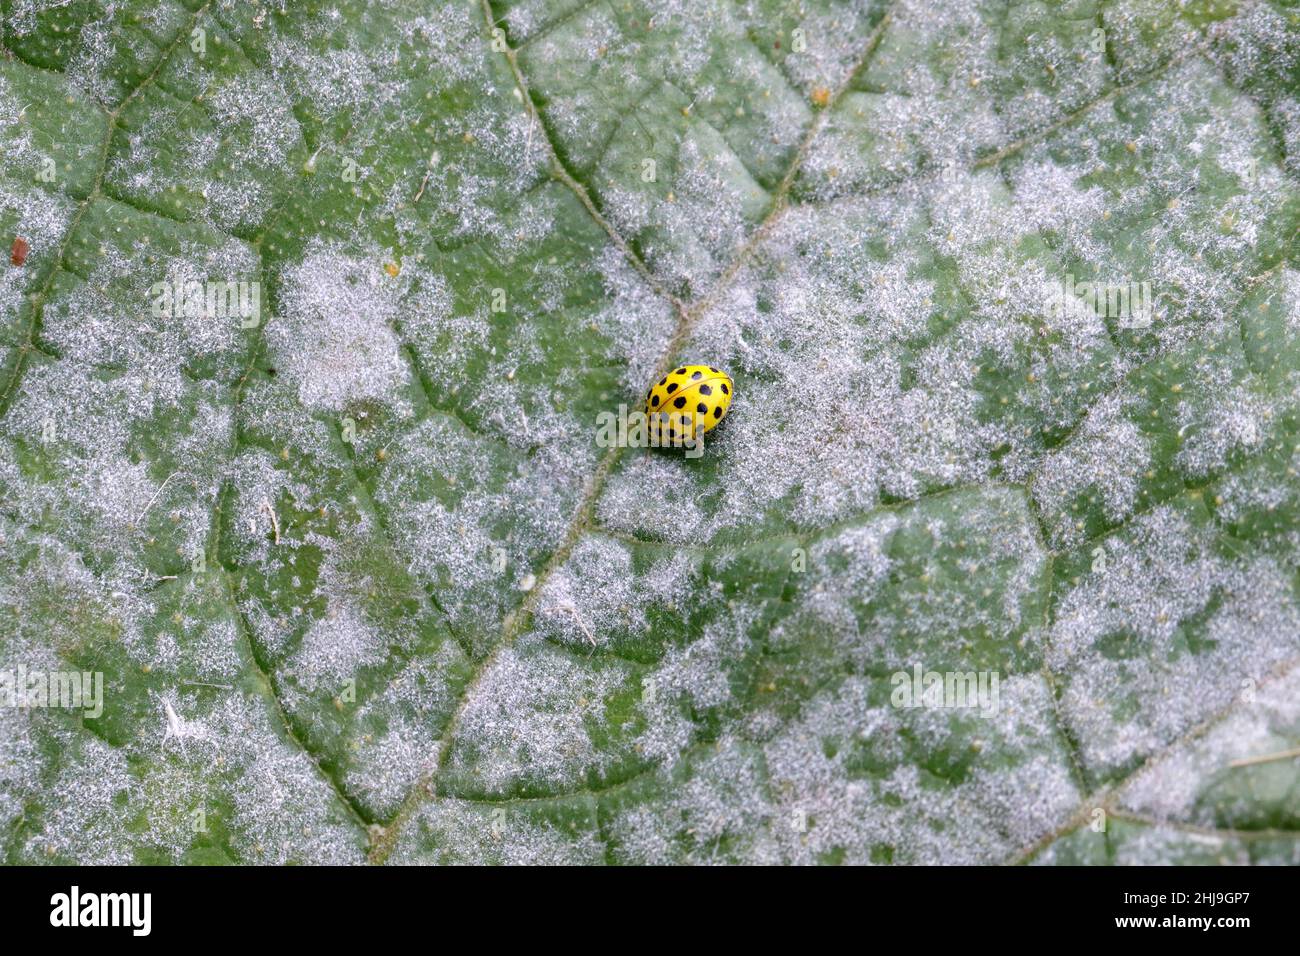 22-spot ladybird, Psyllobora vigintiduopunctata, family Coccinellidae eating powdery mildew on zucchini foliage. Adult insect on a zucchini leaf. Stock Photo